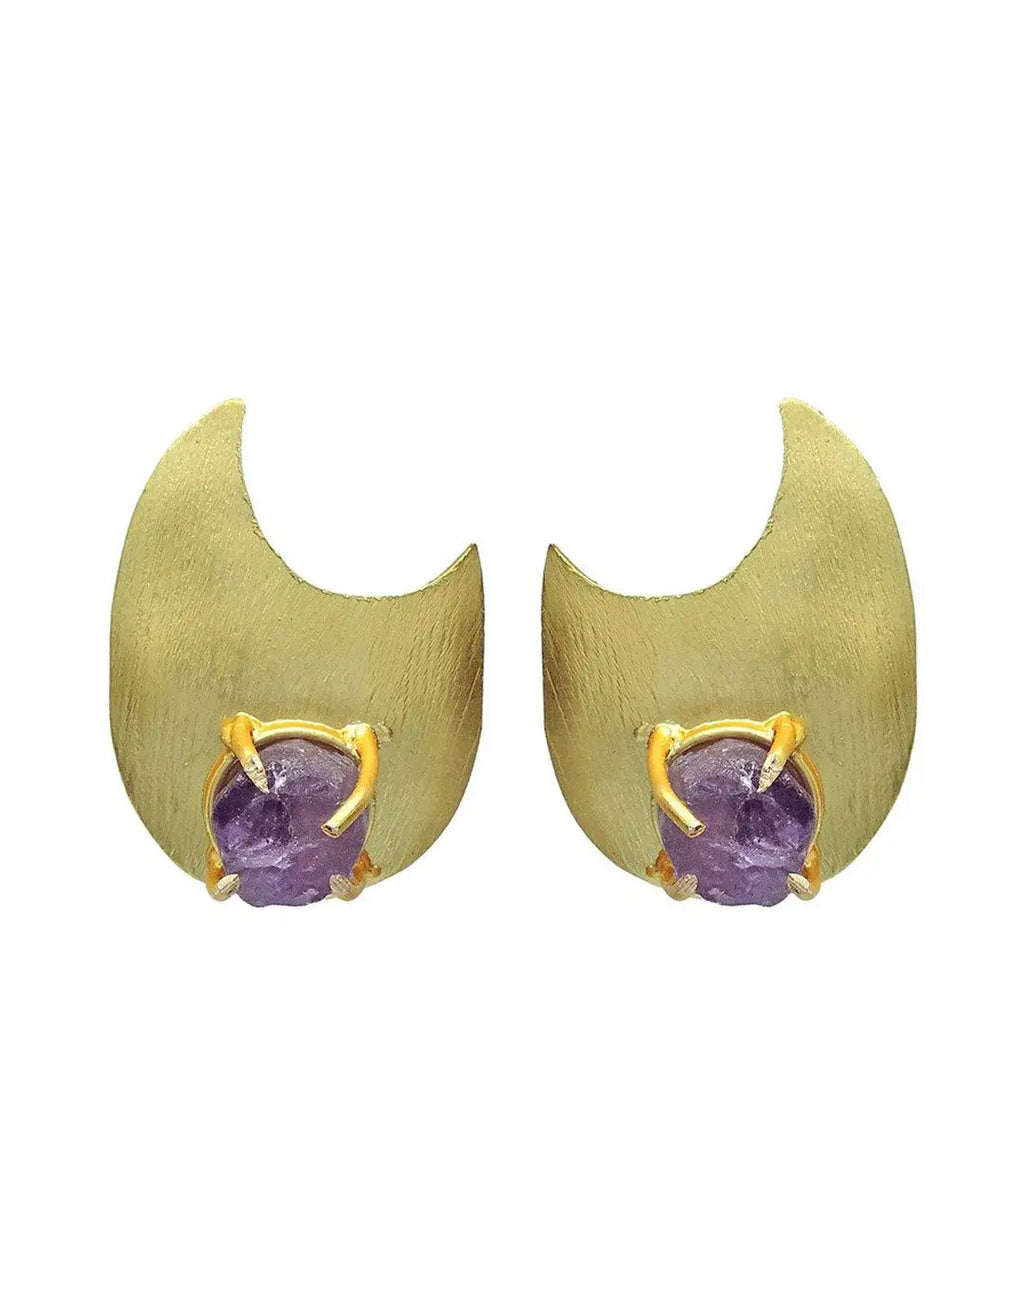 Amethyst Shard Earrings- Handcrafted Jewellery from Dori